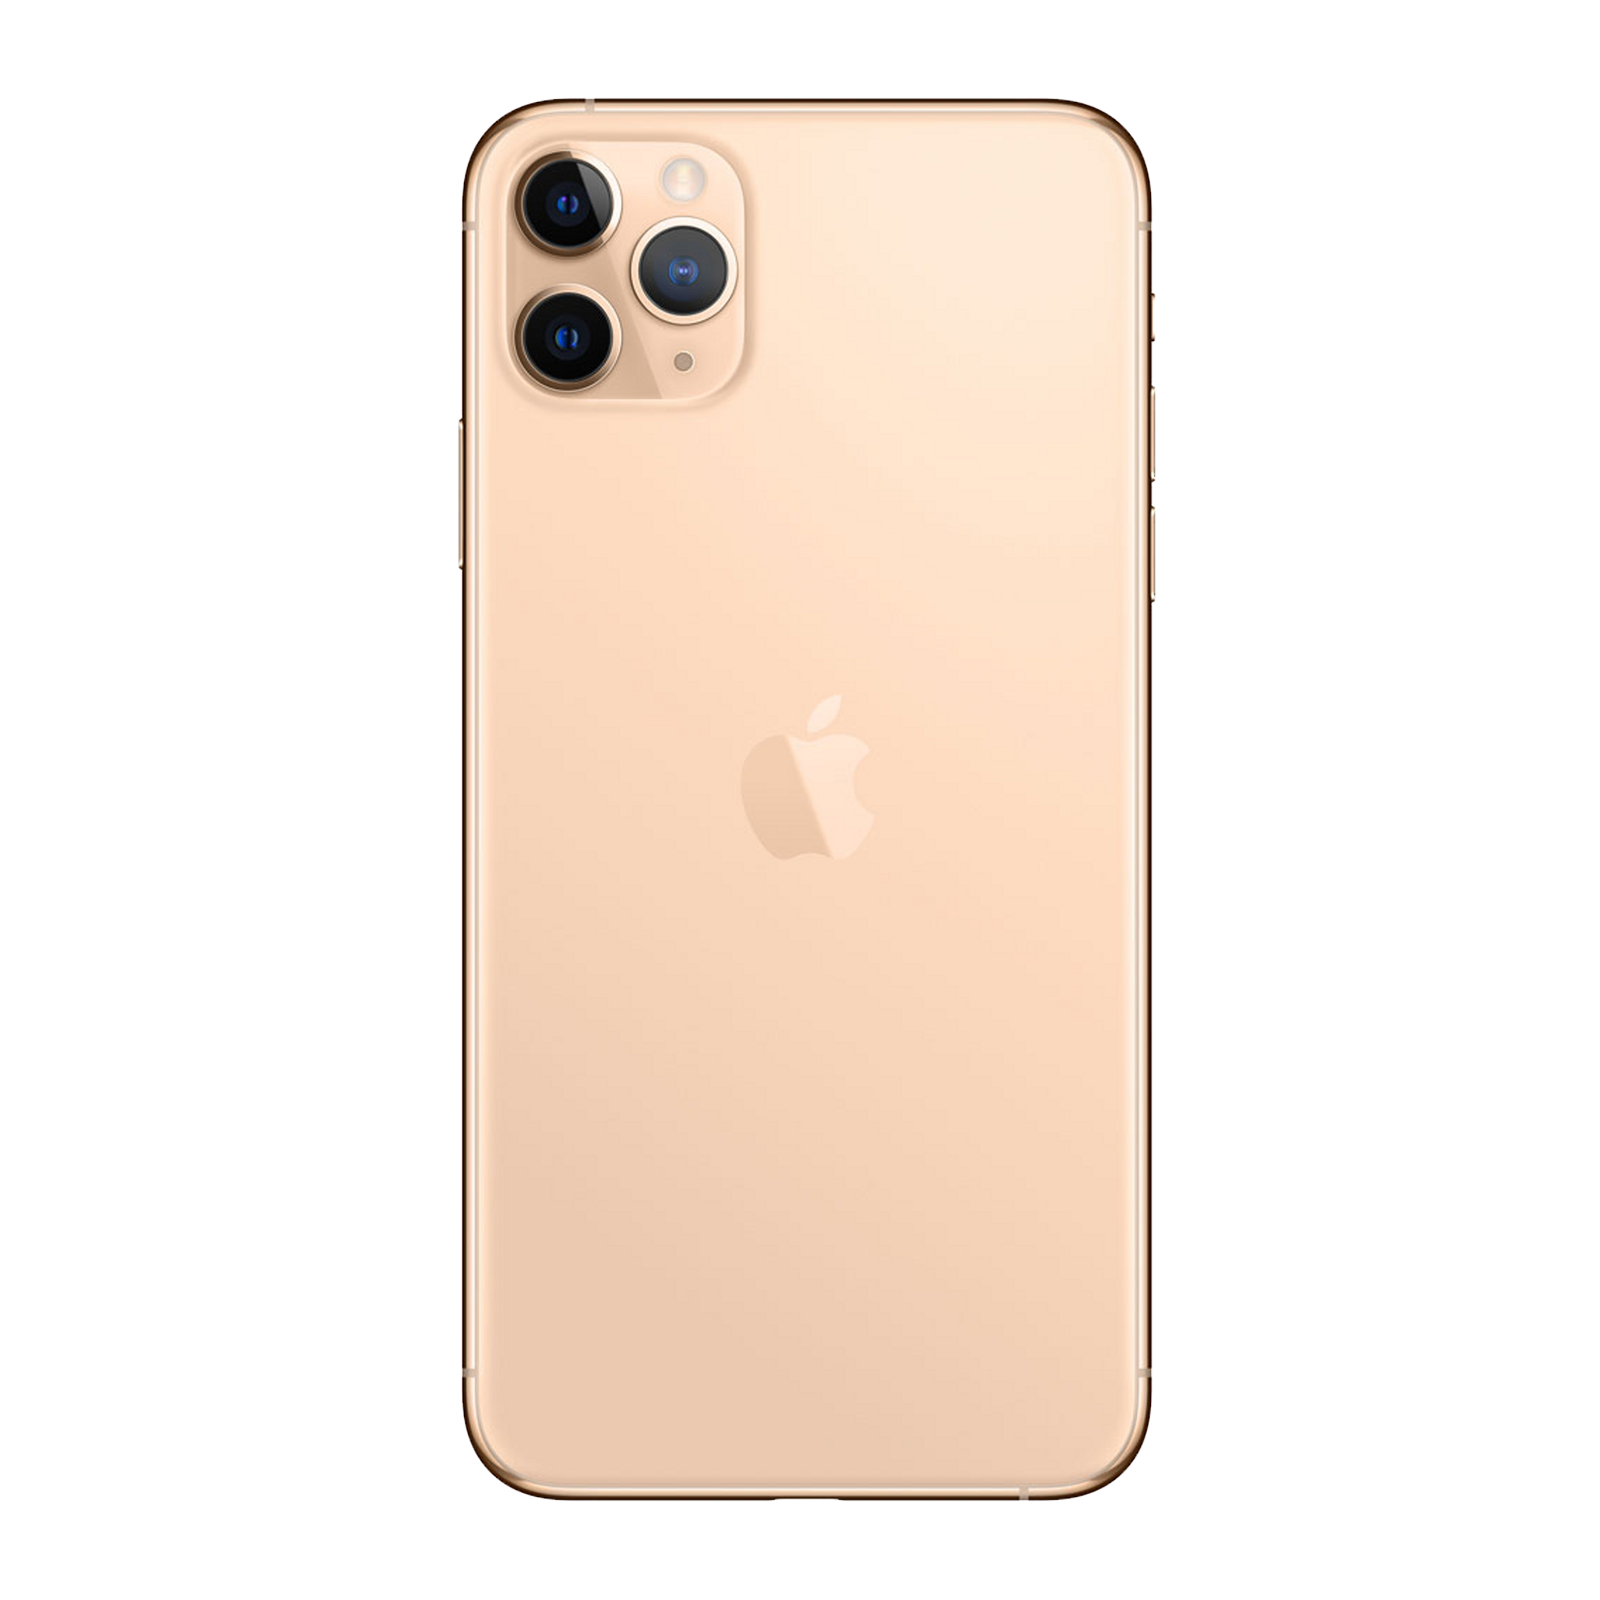 Apple iPhone 11 Pro Max 256GB Gold Good - Unlocked